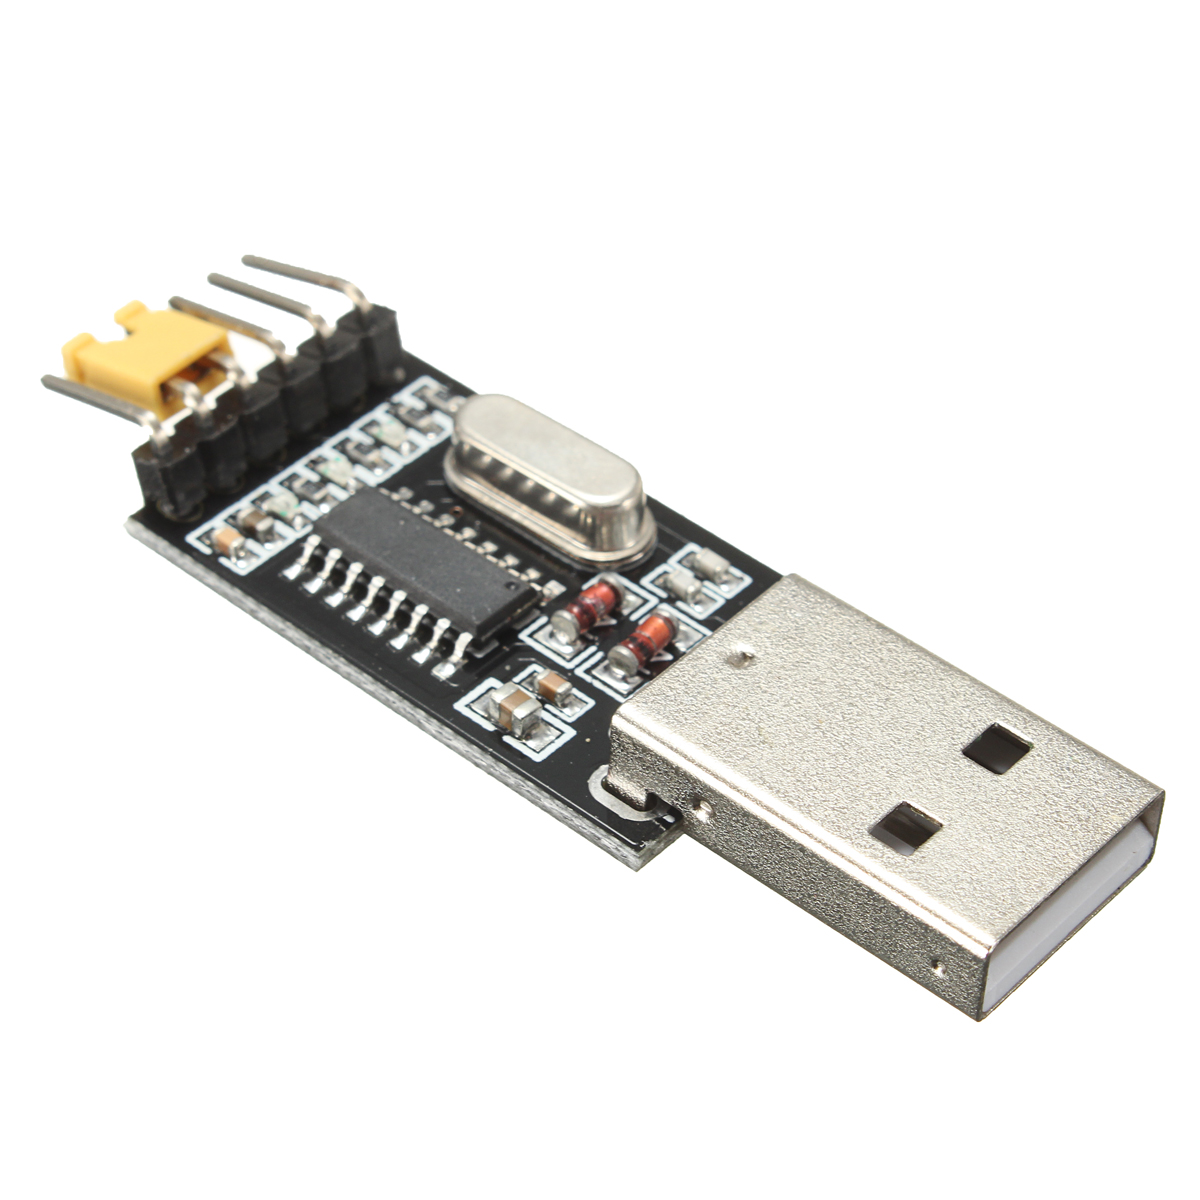 3pcs-33V-5V-USB-to-TTL-Converter-CH340G-UART-Serial-Adapter-Module-STC-1314969-2